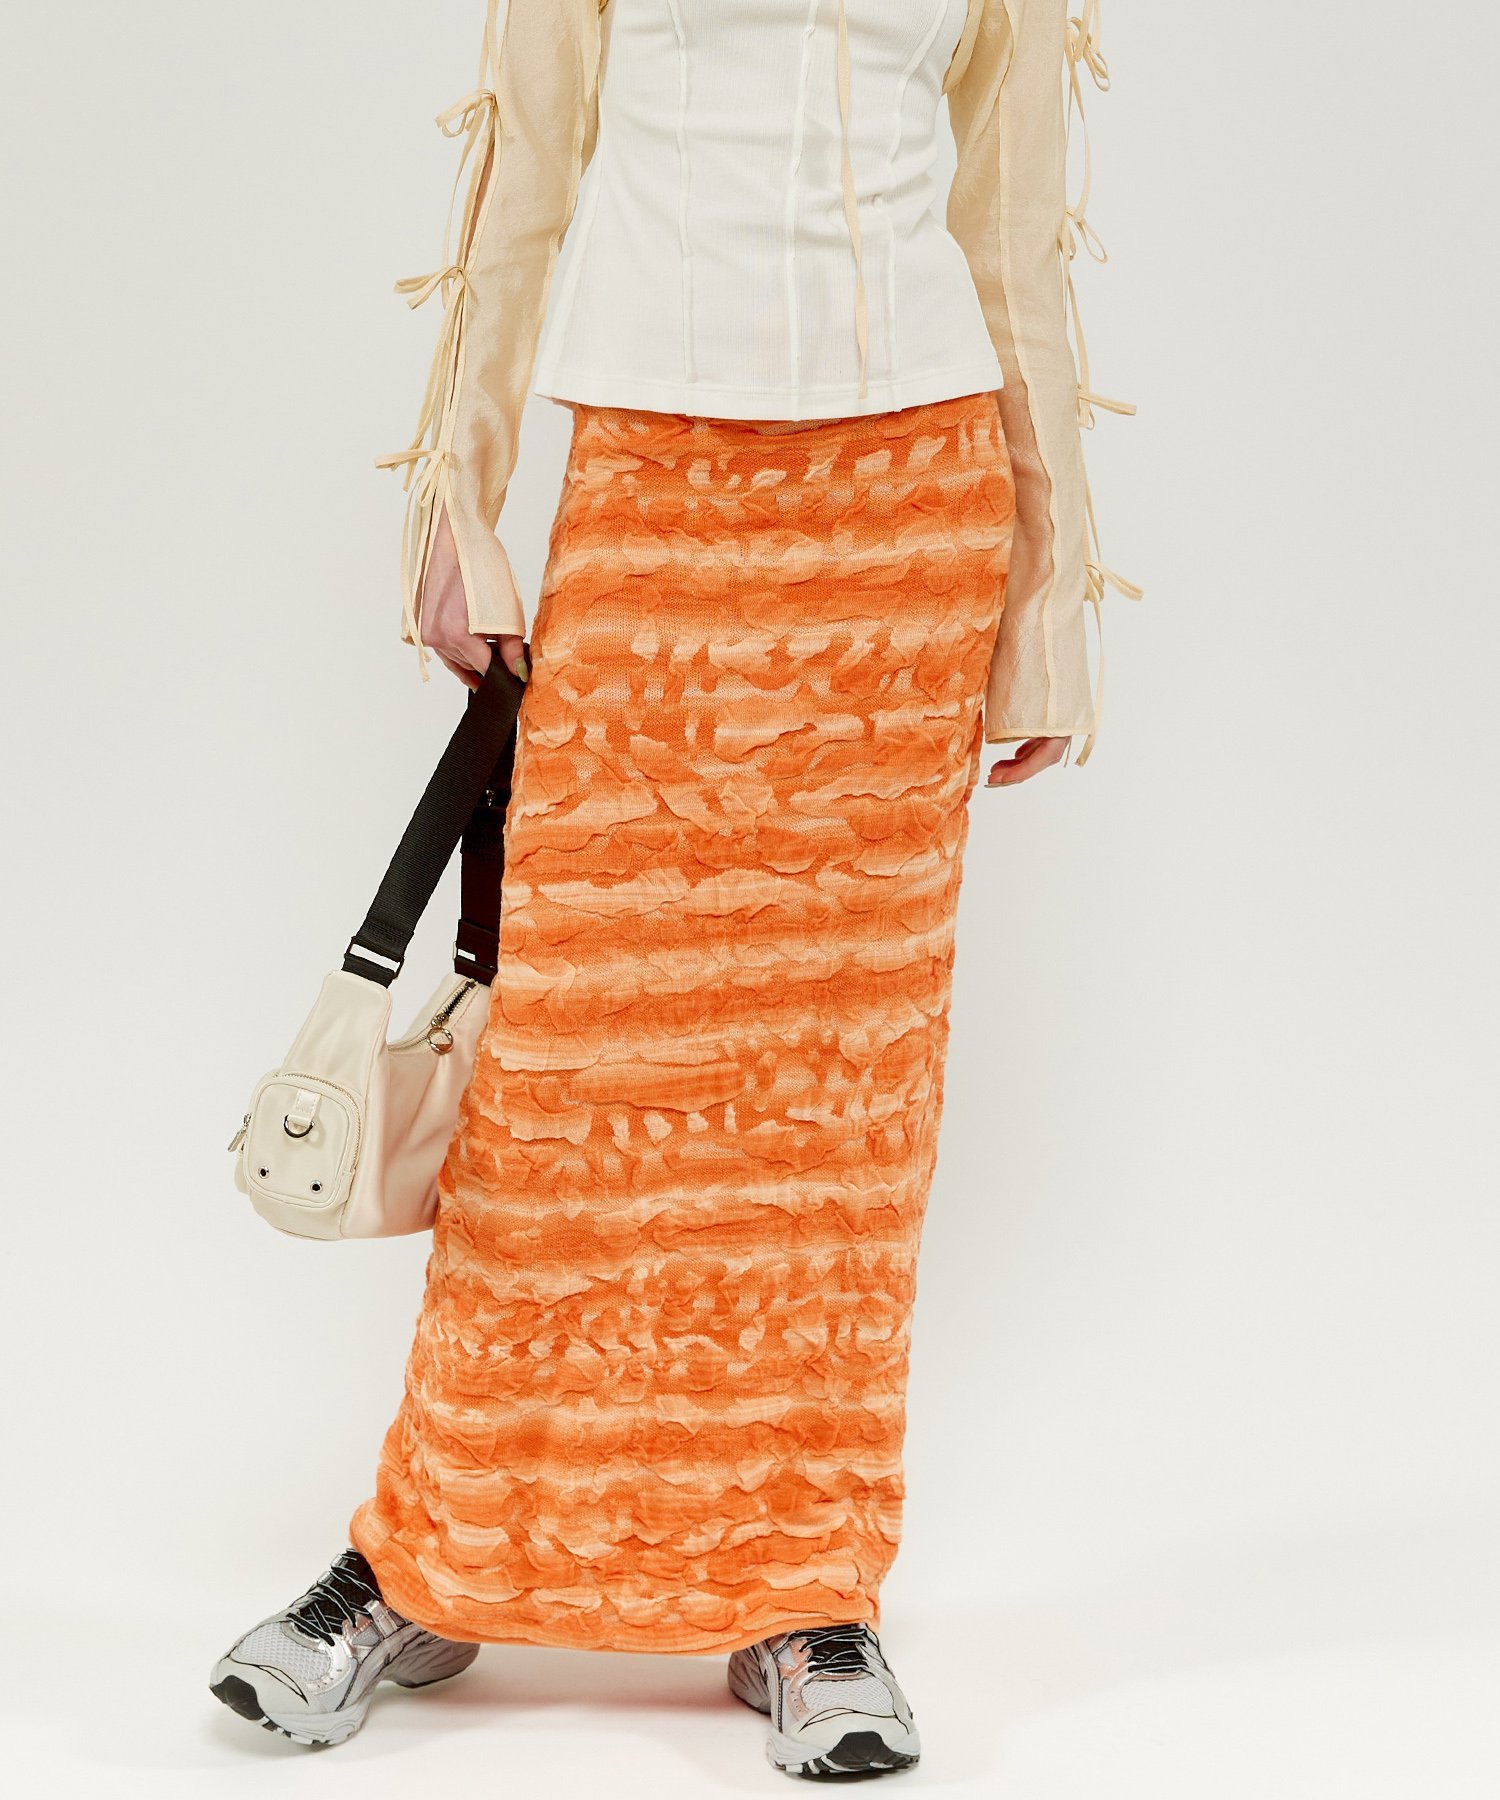 MAISON SPECIAL Bumpy Splashed Pattern Knit Tight Skirt メゾンスペシャル スカート ロング マキシスカート オレンジ【送料無料】